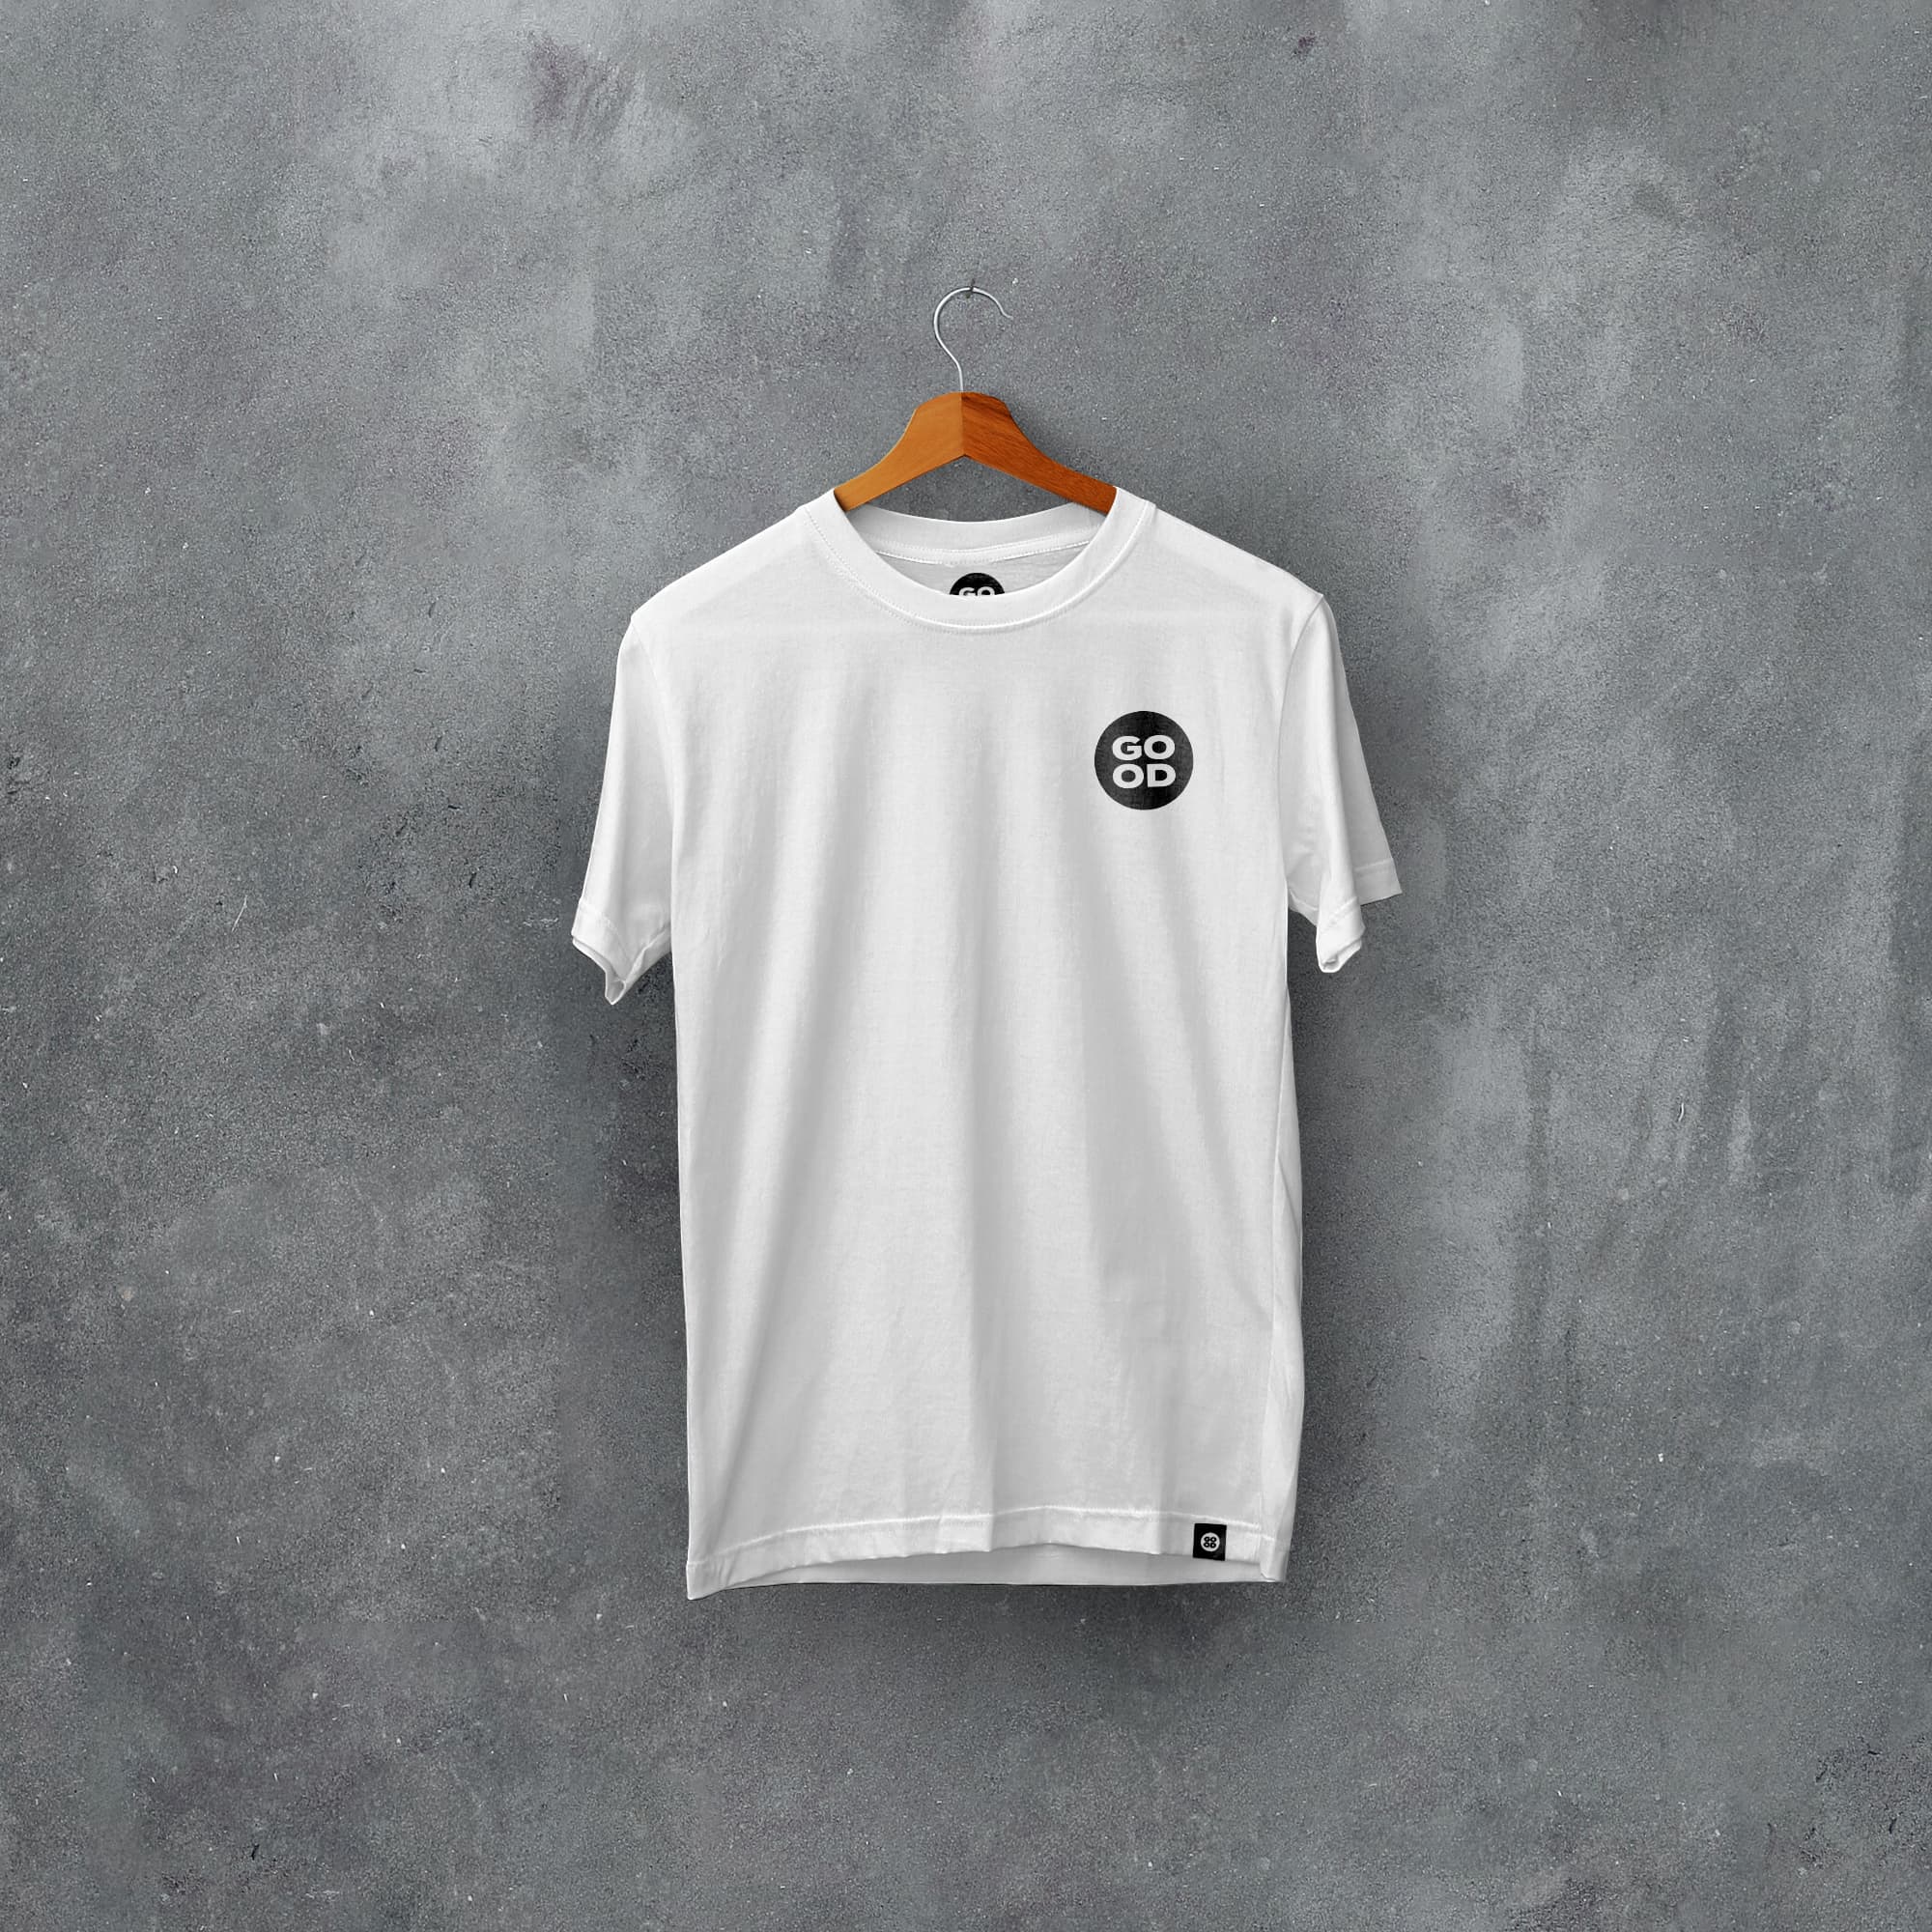 City Classic Kits Football T-Shirt